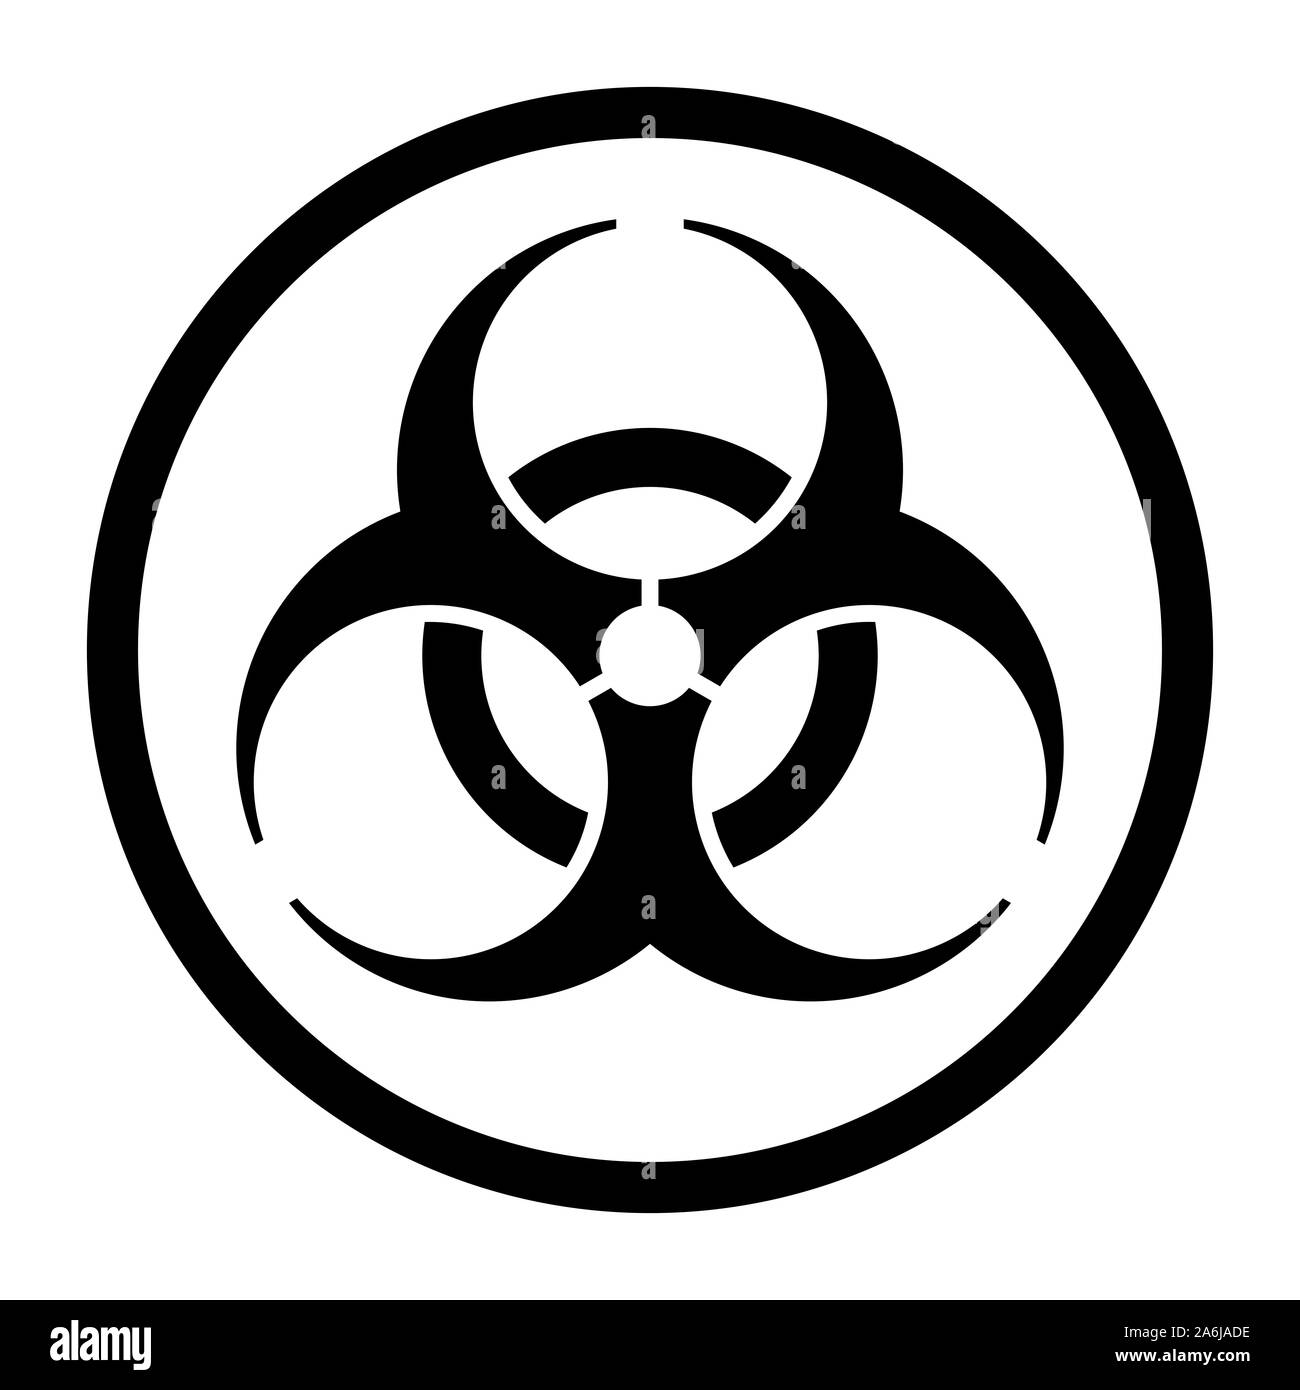 Biohazard symbol icon in a circle Stock Photo